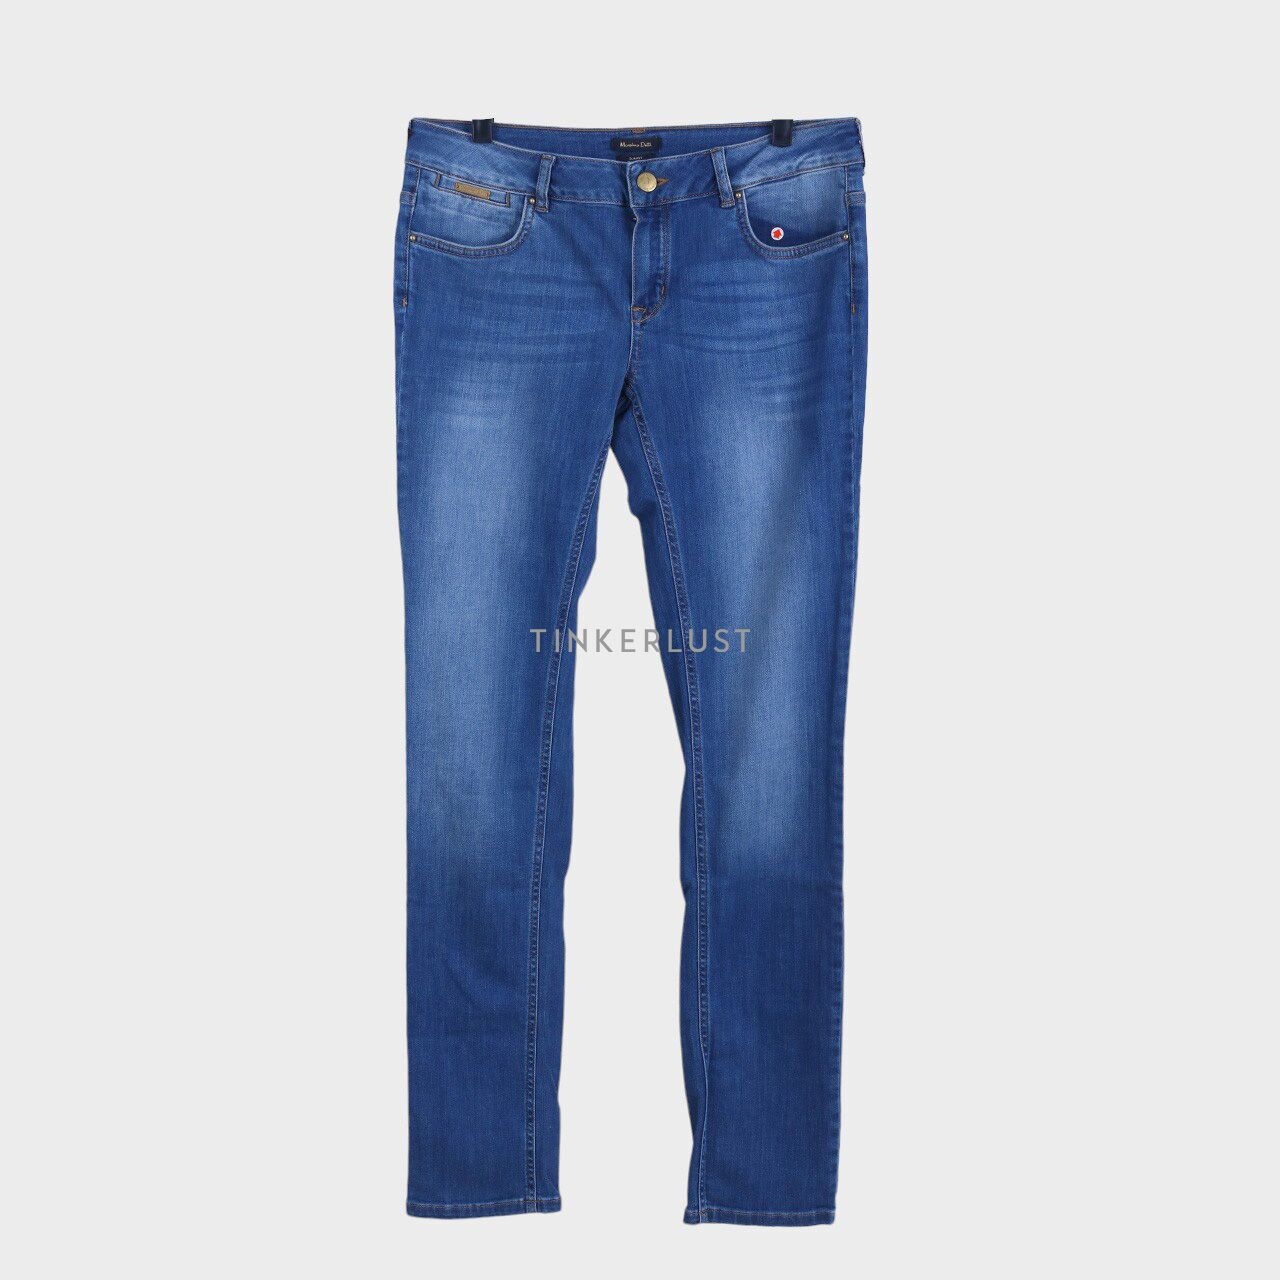 Massimo Dutti Blue Jeans Long Pants